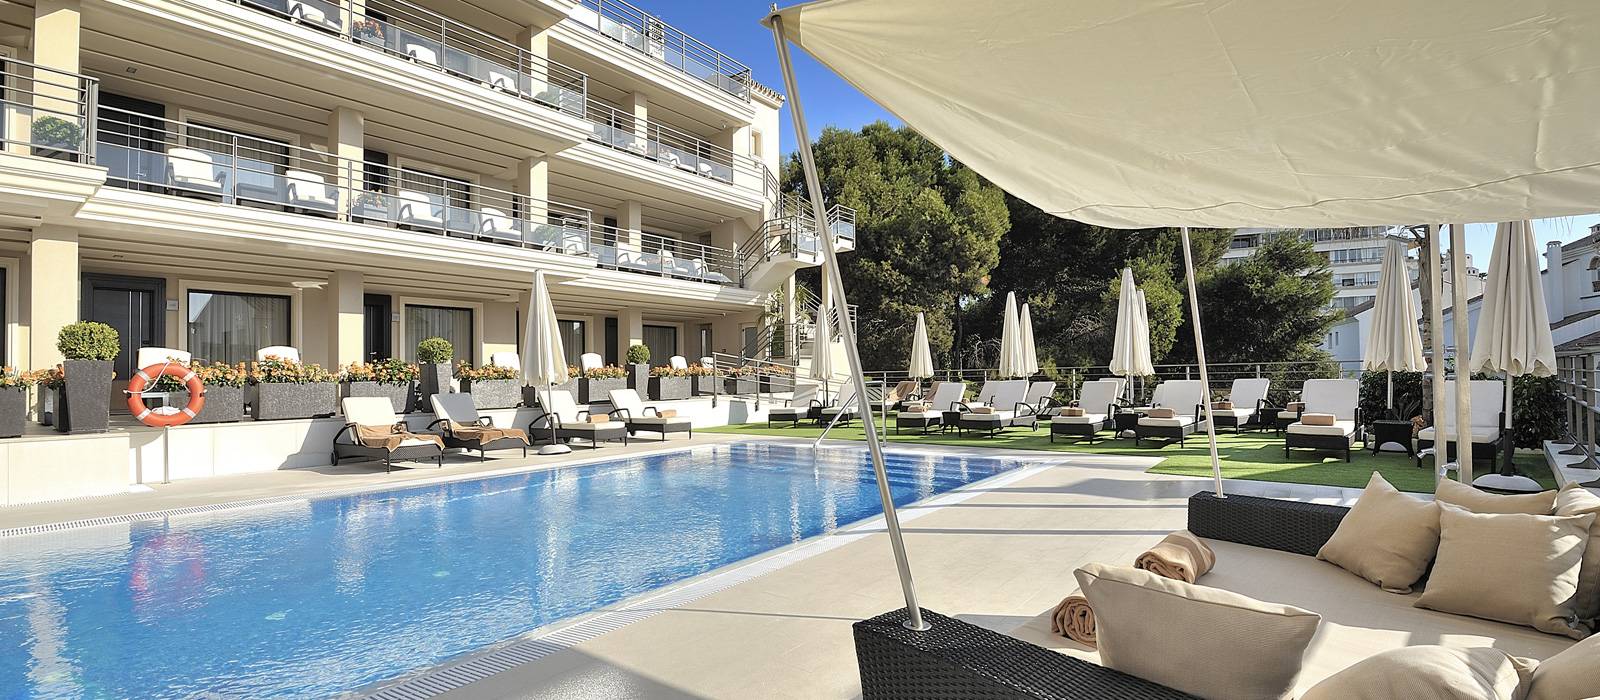 Hotel Vincci Aleysa Boutique&Spa - Pool und Freibad mit Hydromassage